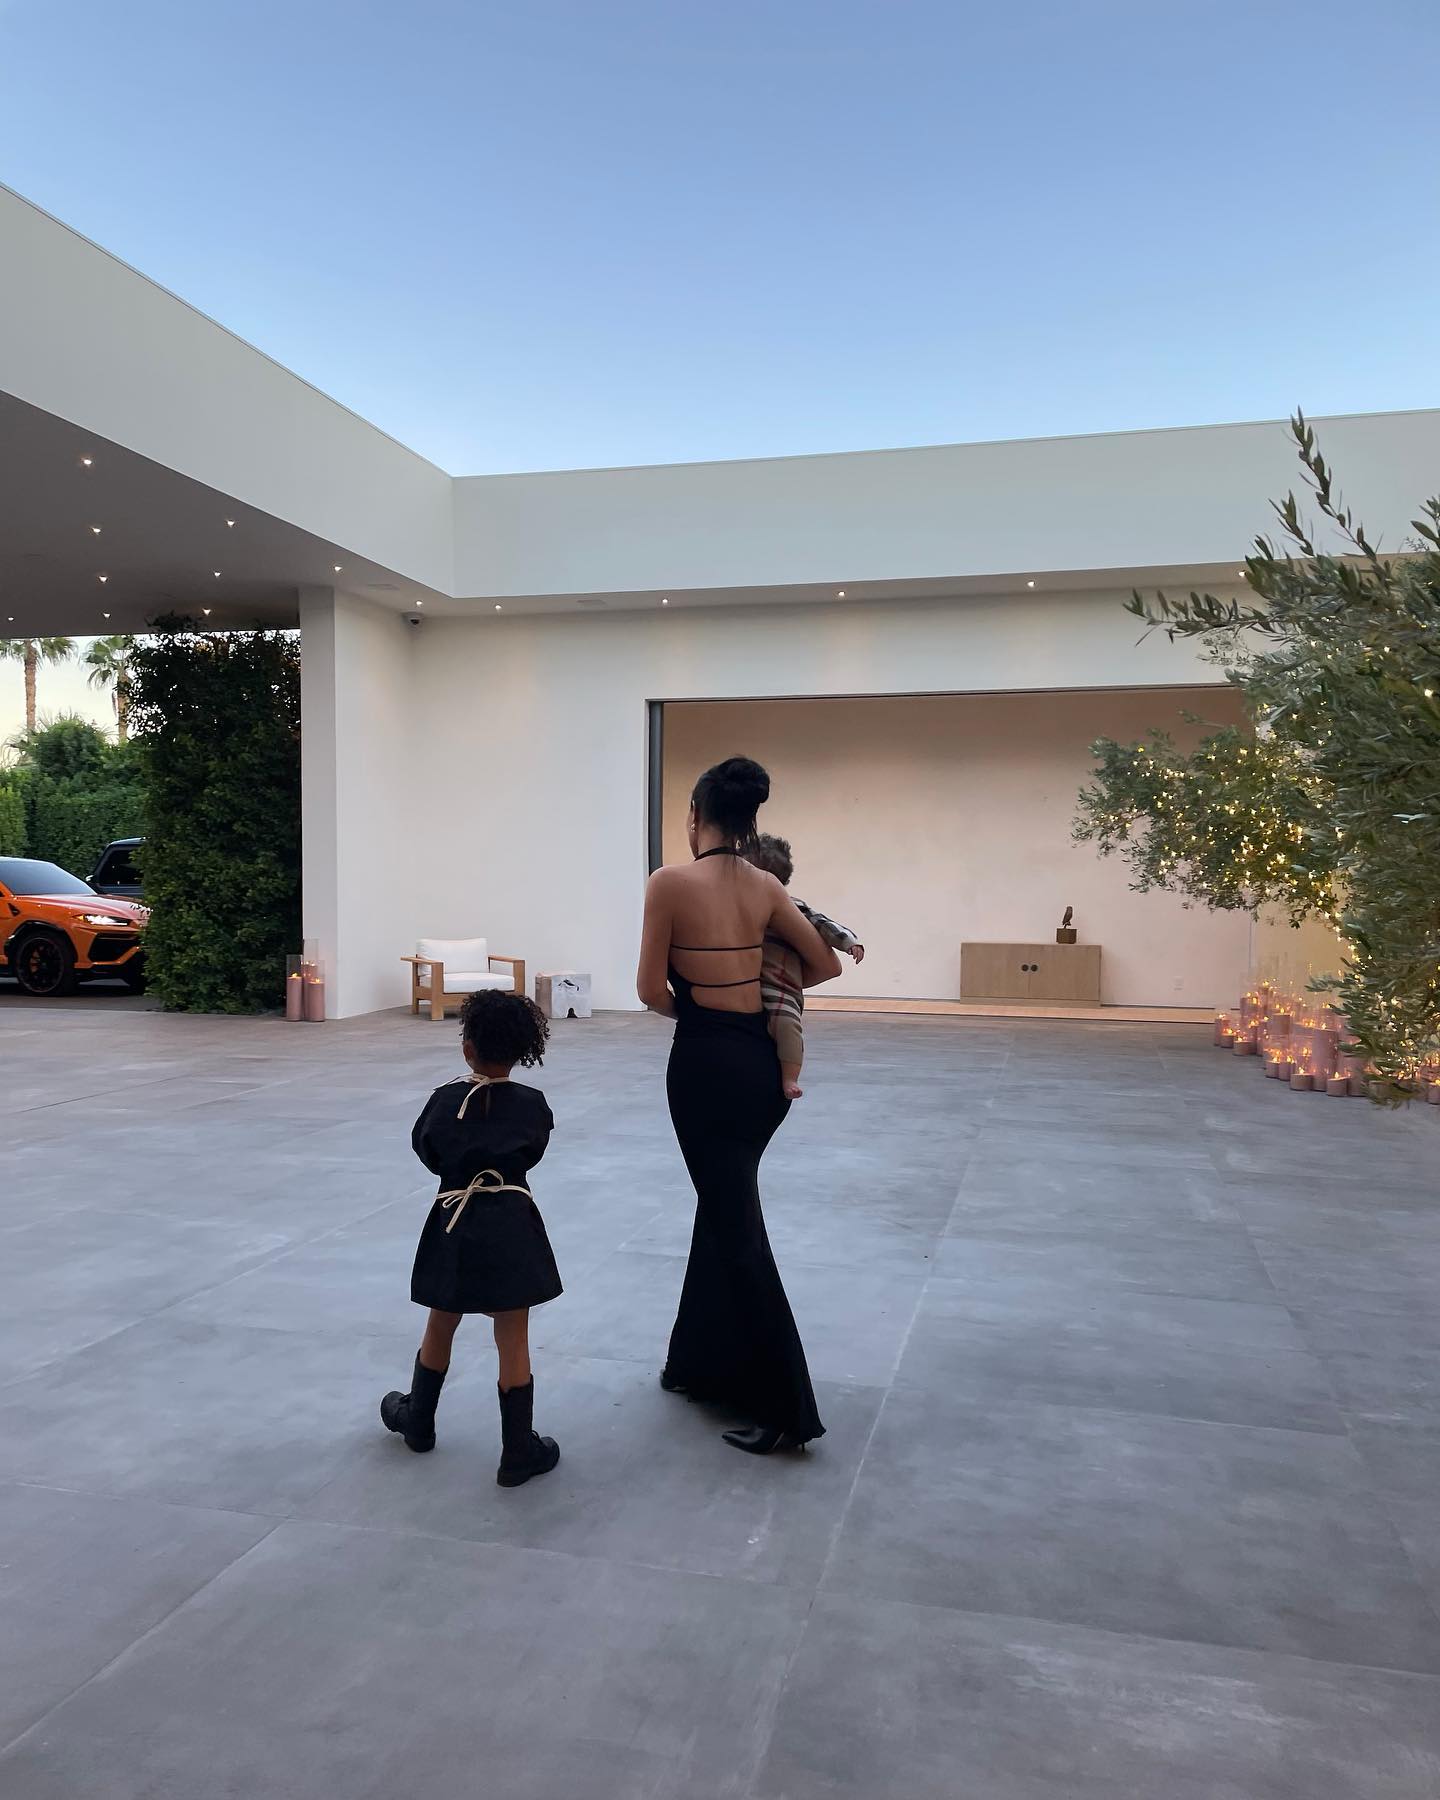 Fans Say Kylie Jenner's Mega-Mansion Looks Like a Doll House